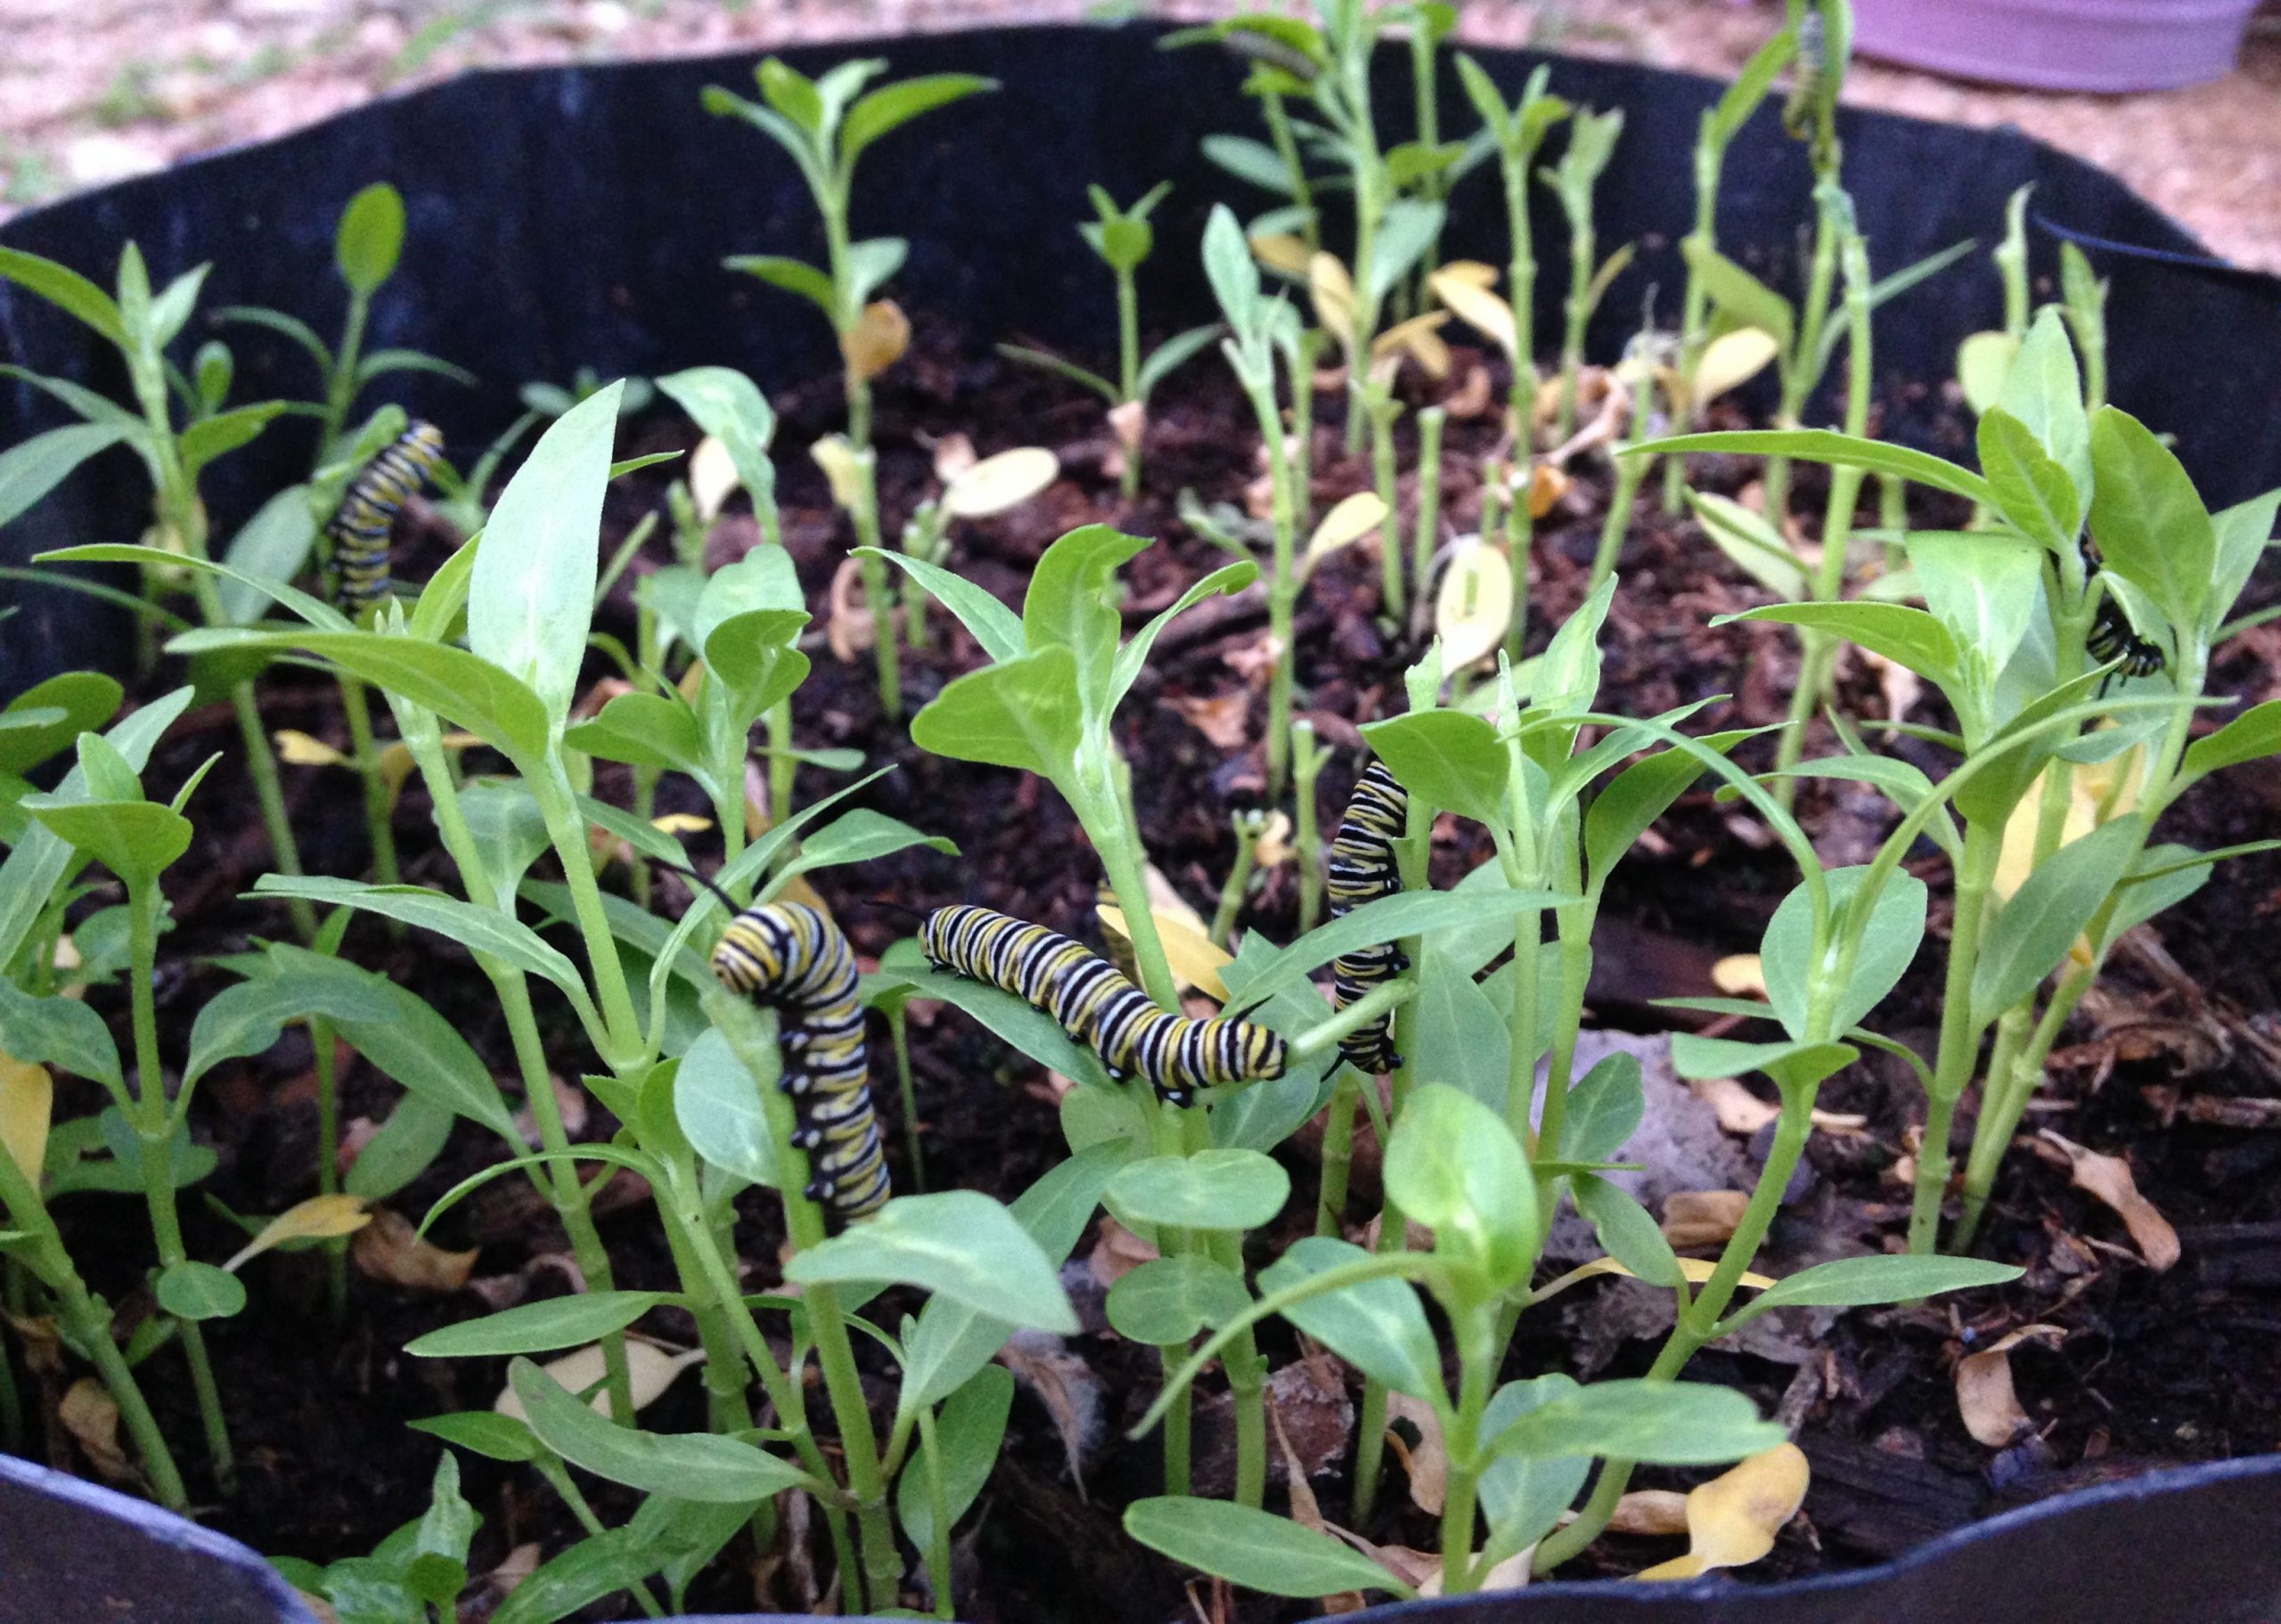 Hungry caterpillars on milkweed seedlings